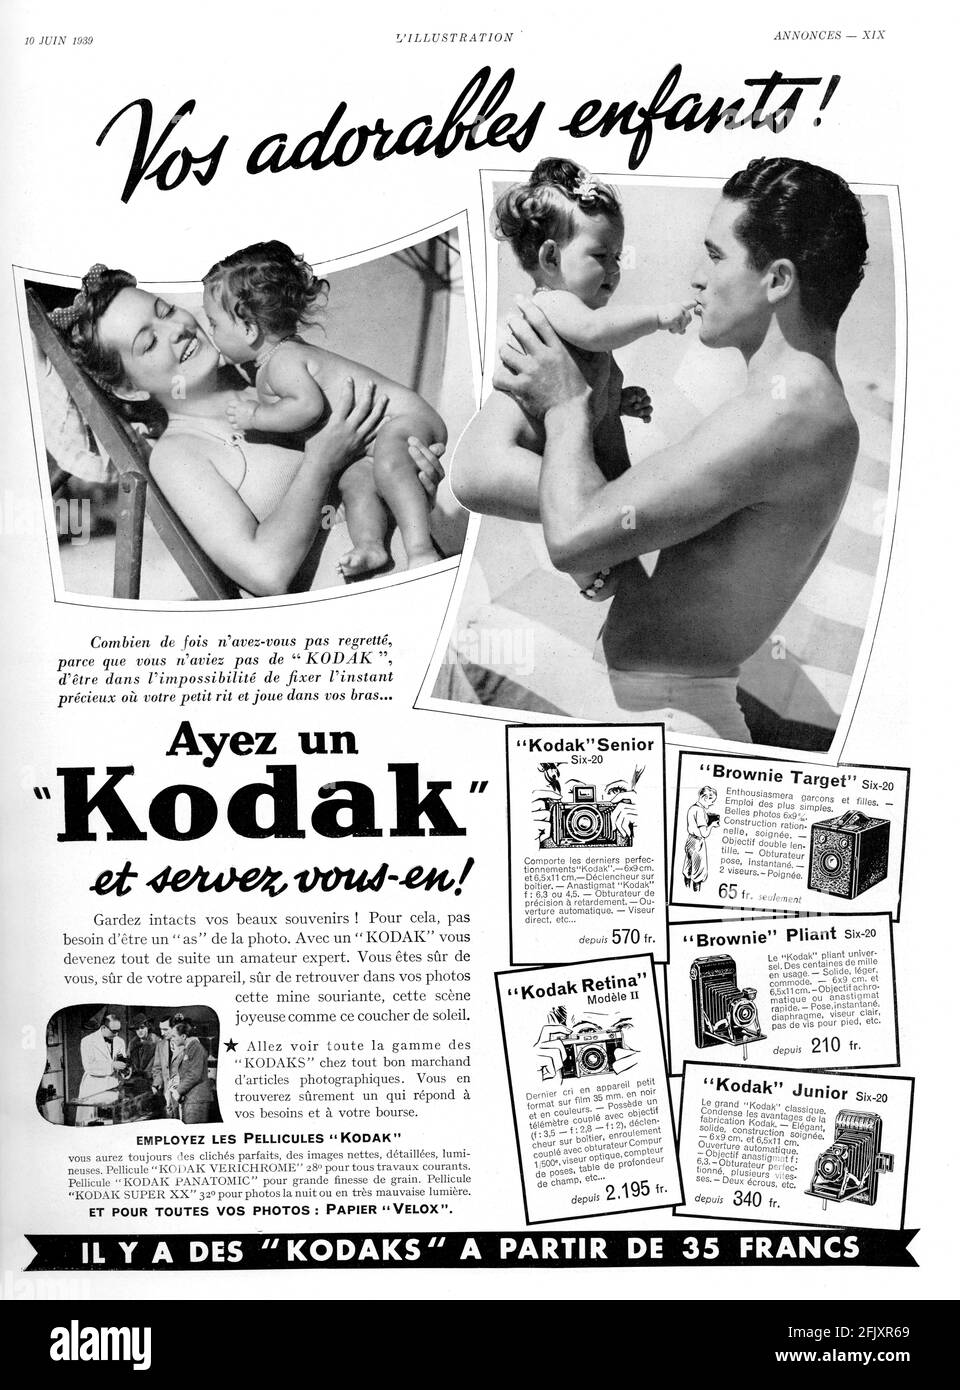 Vintage French 'Kodak Vos Adorables Enfants!' Advertisement (A3+ poster quality, 600dpi) Stock Photo